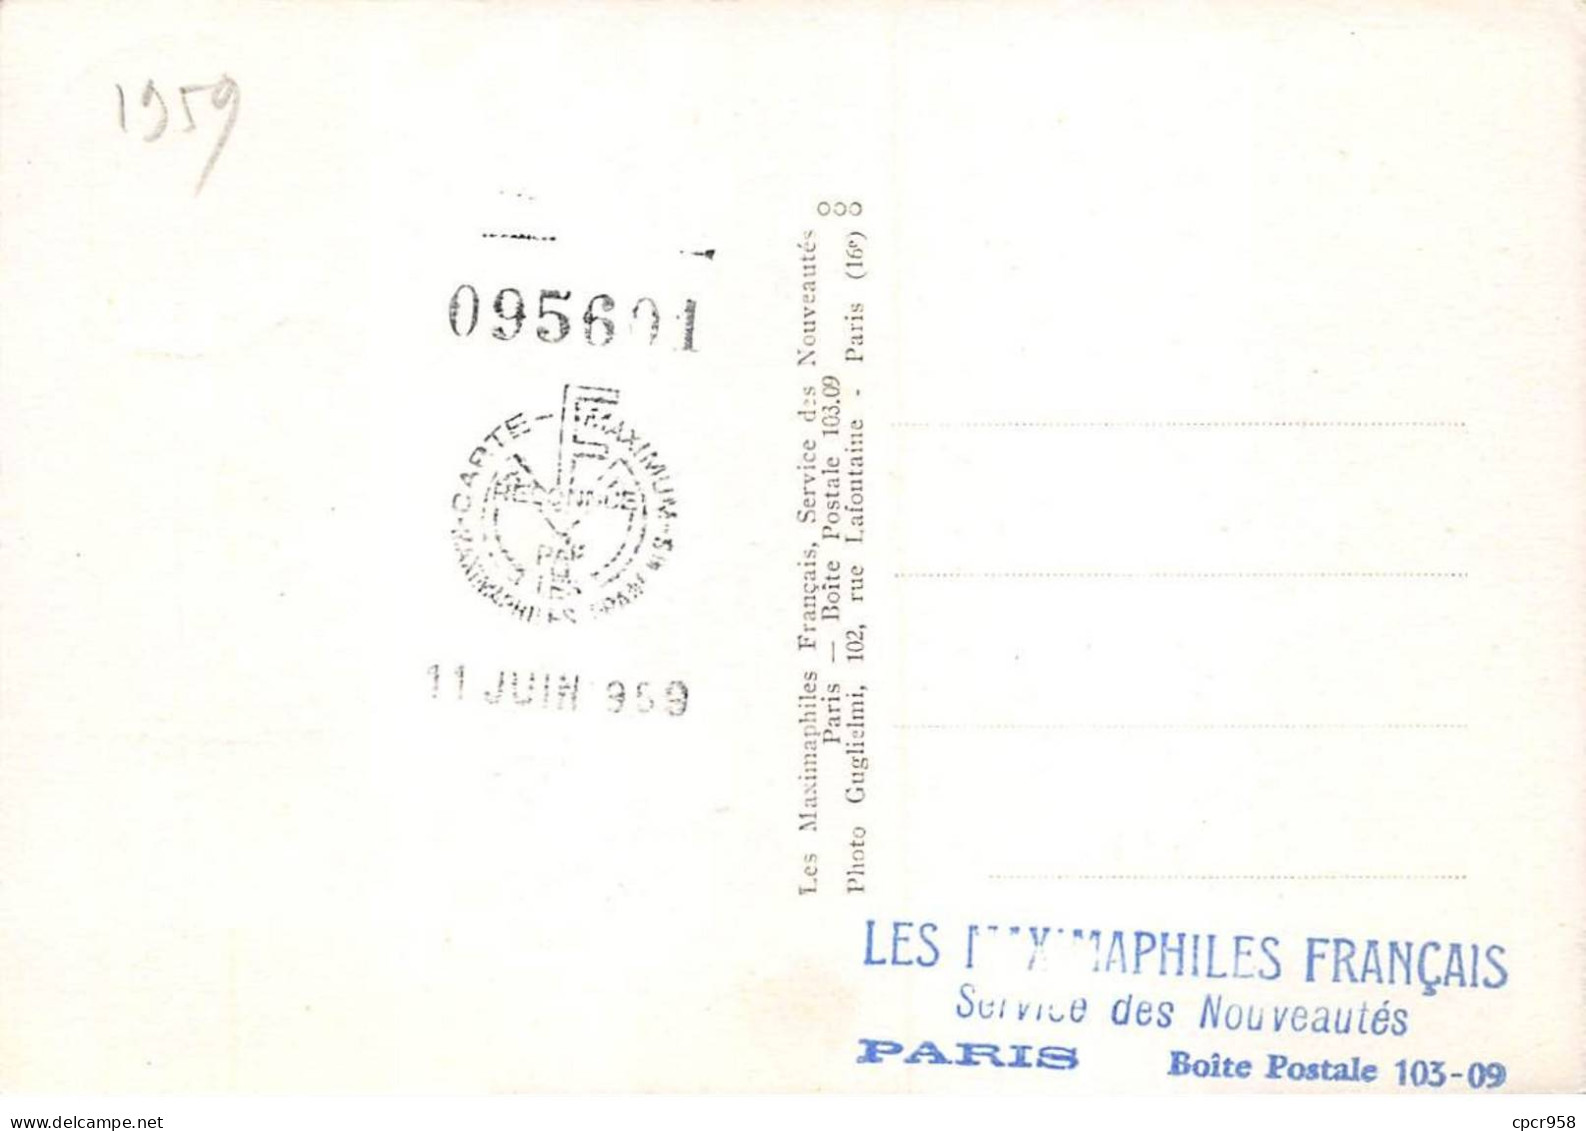 Carte Maximum - ALGERIE -  COR12732 - 23/05/1959 - Barrage De FOUM EL GHERZA -  Cachet Biskra - Otros - África